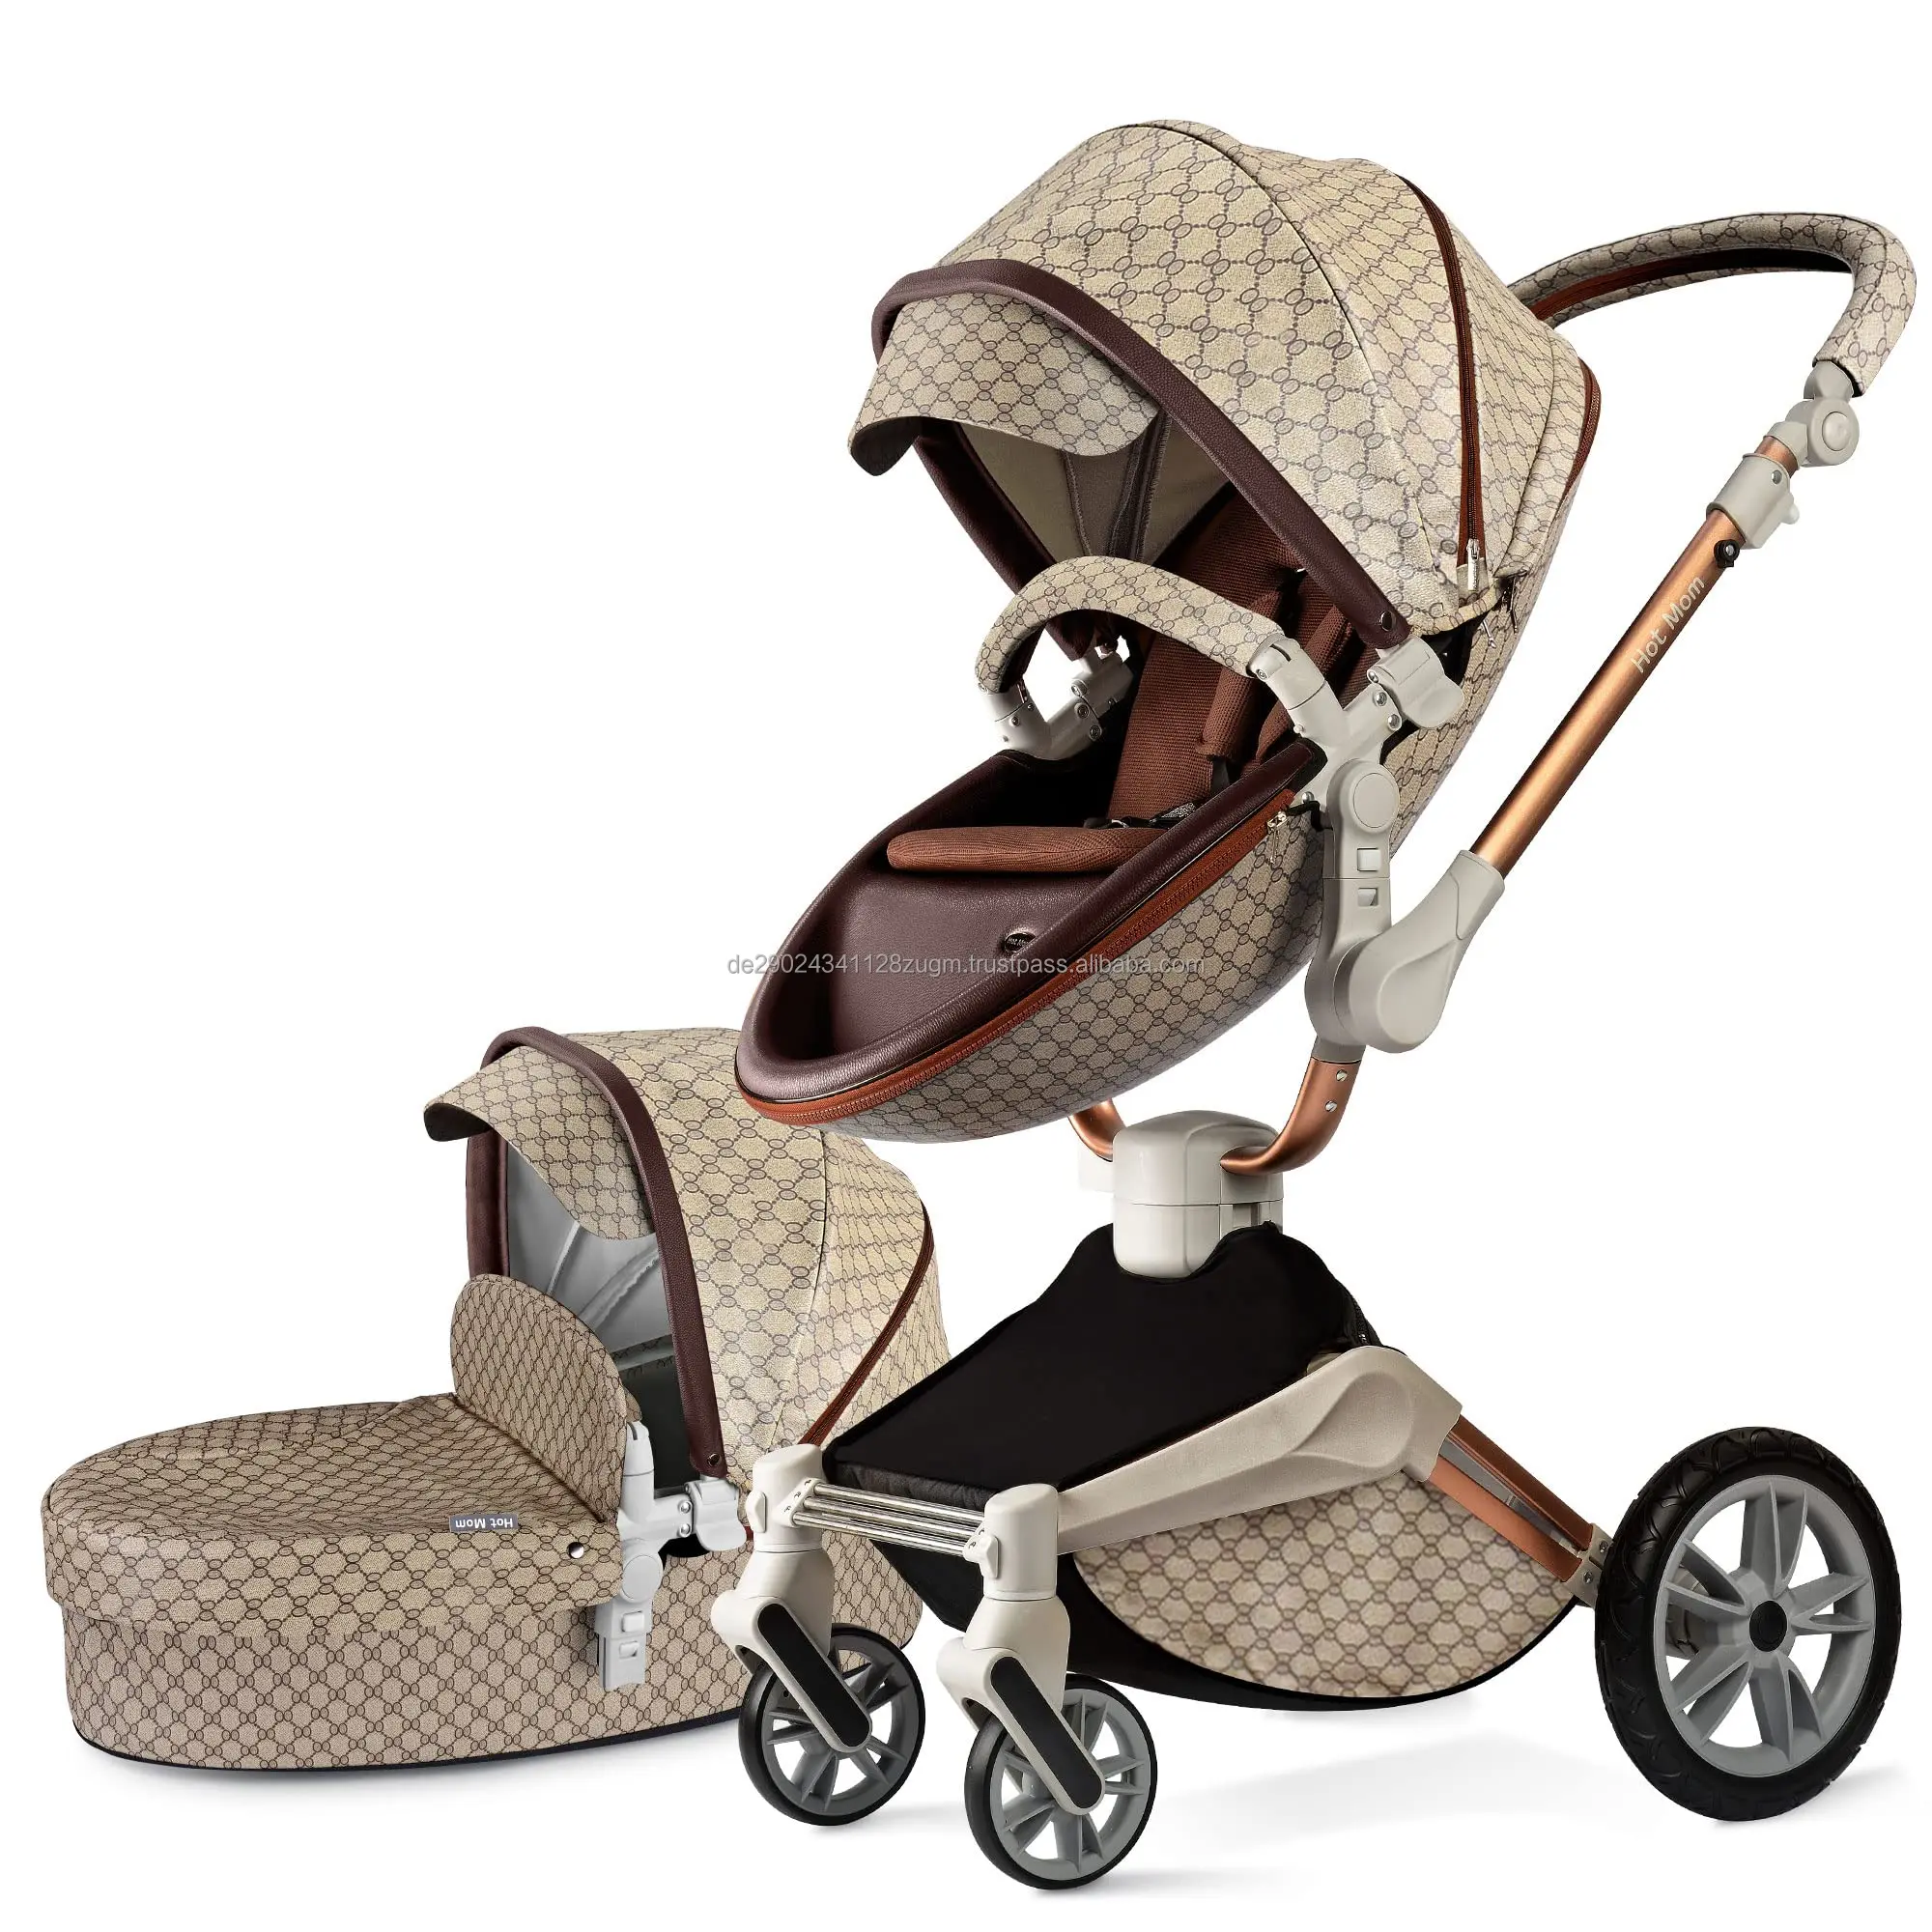 3 in 1 Hot Mom Baby Stroller for Travel